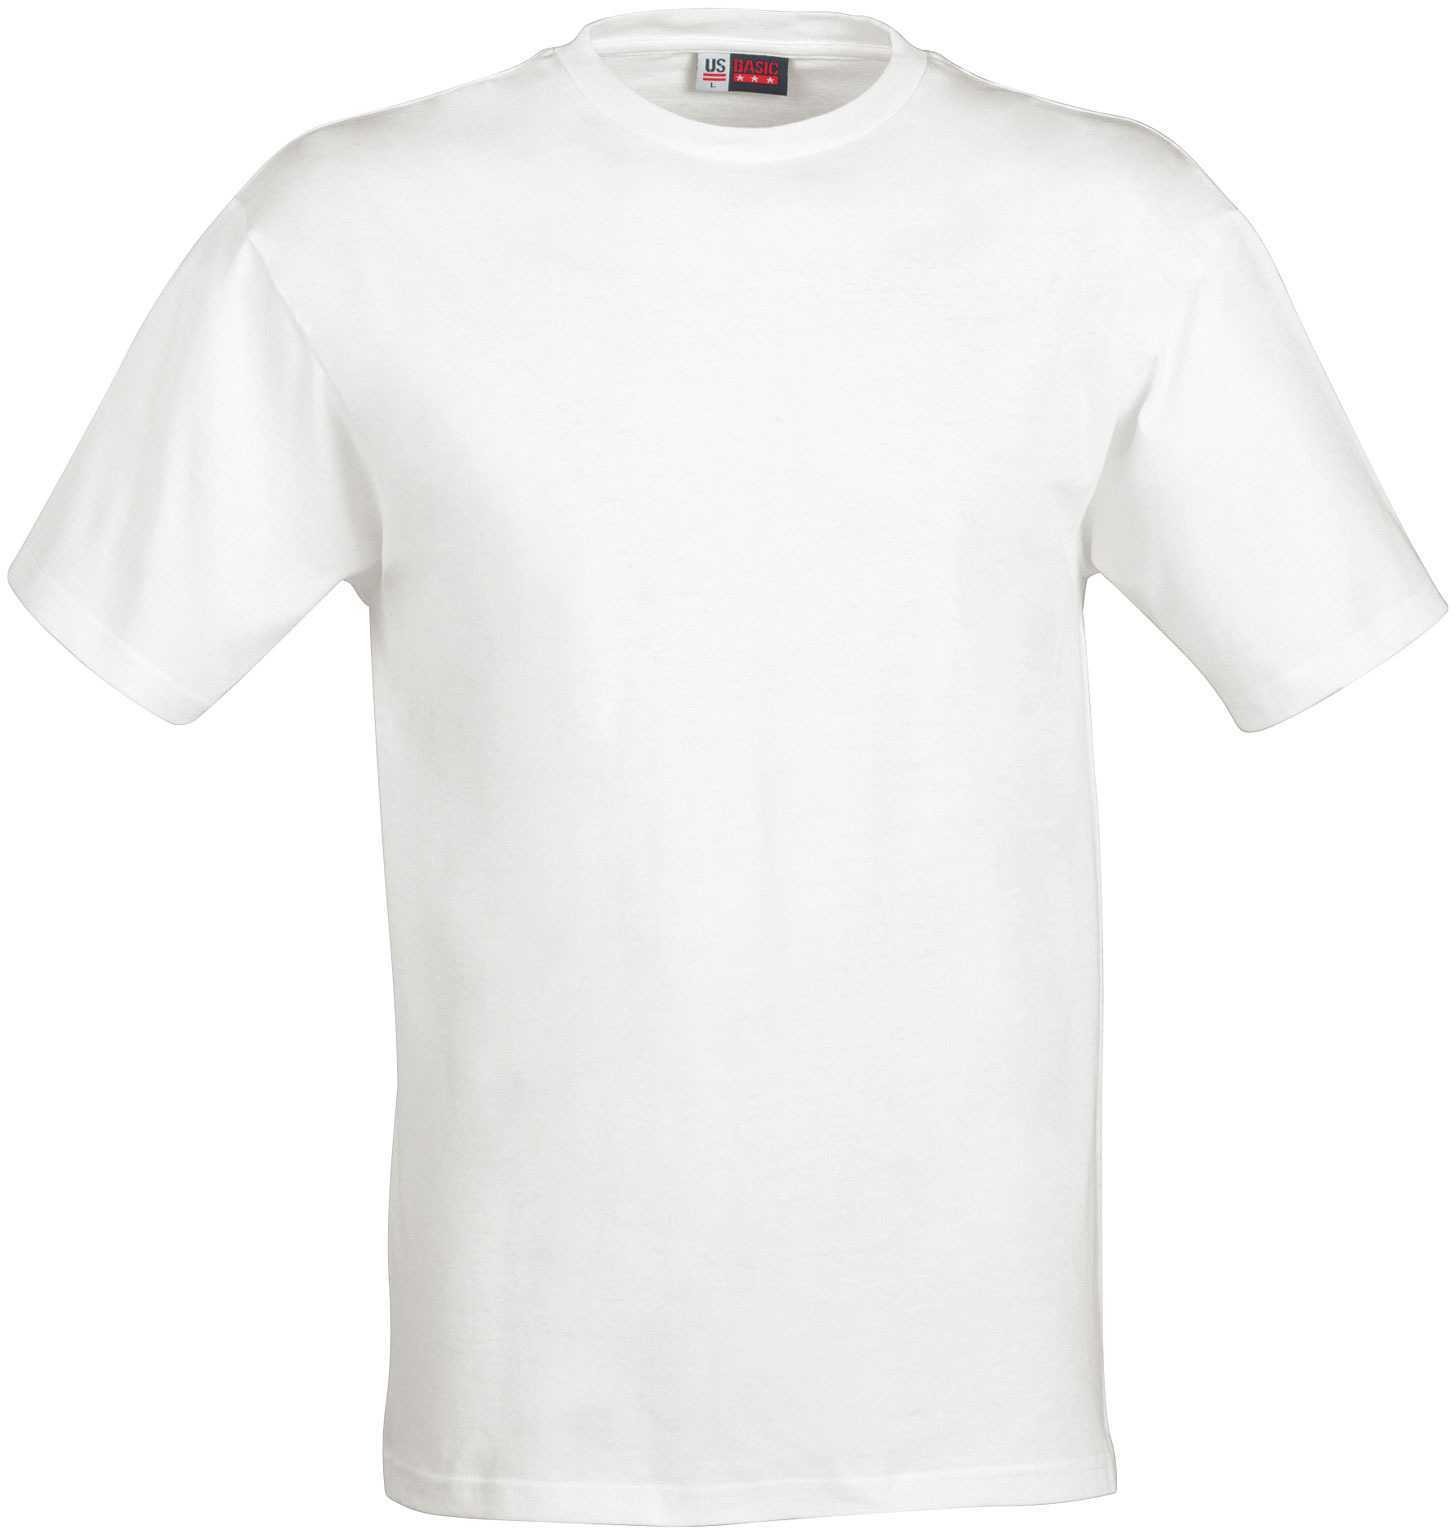 White T-Shirt for “Madei Alef” Uniform